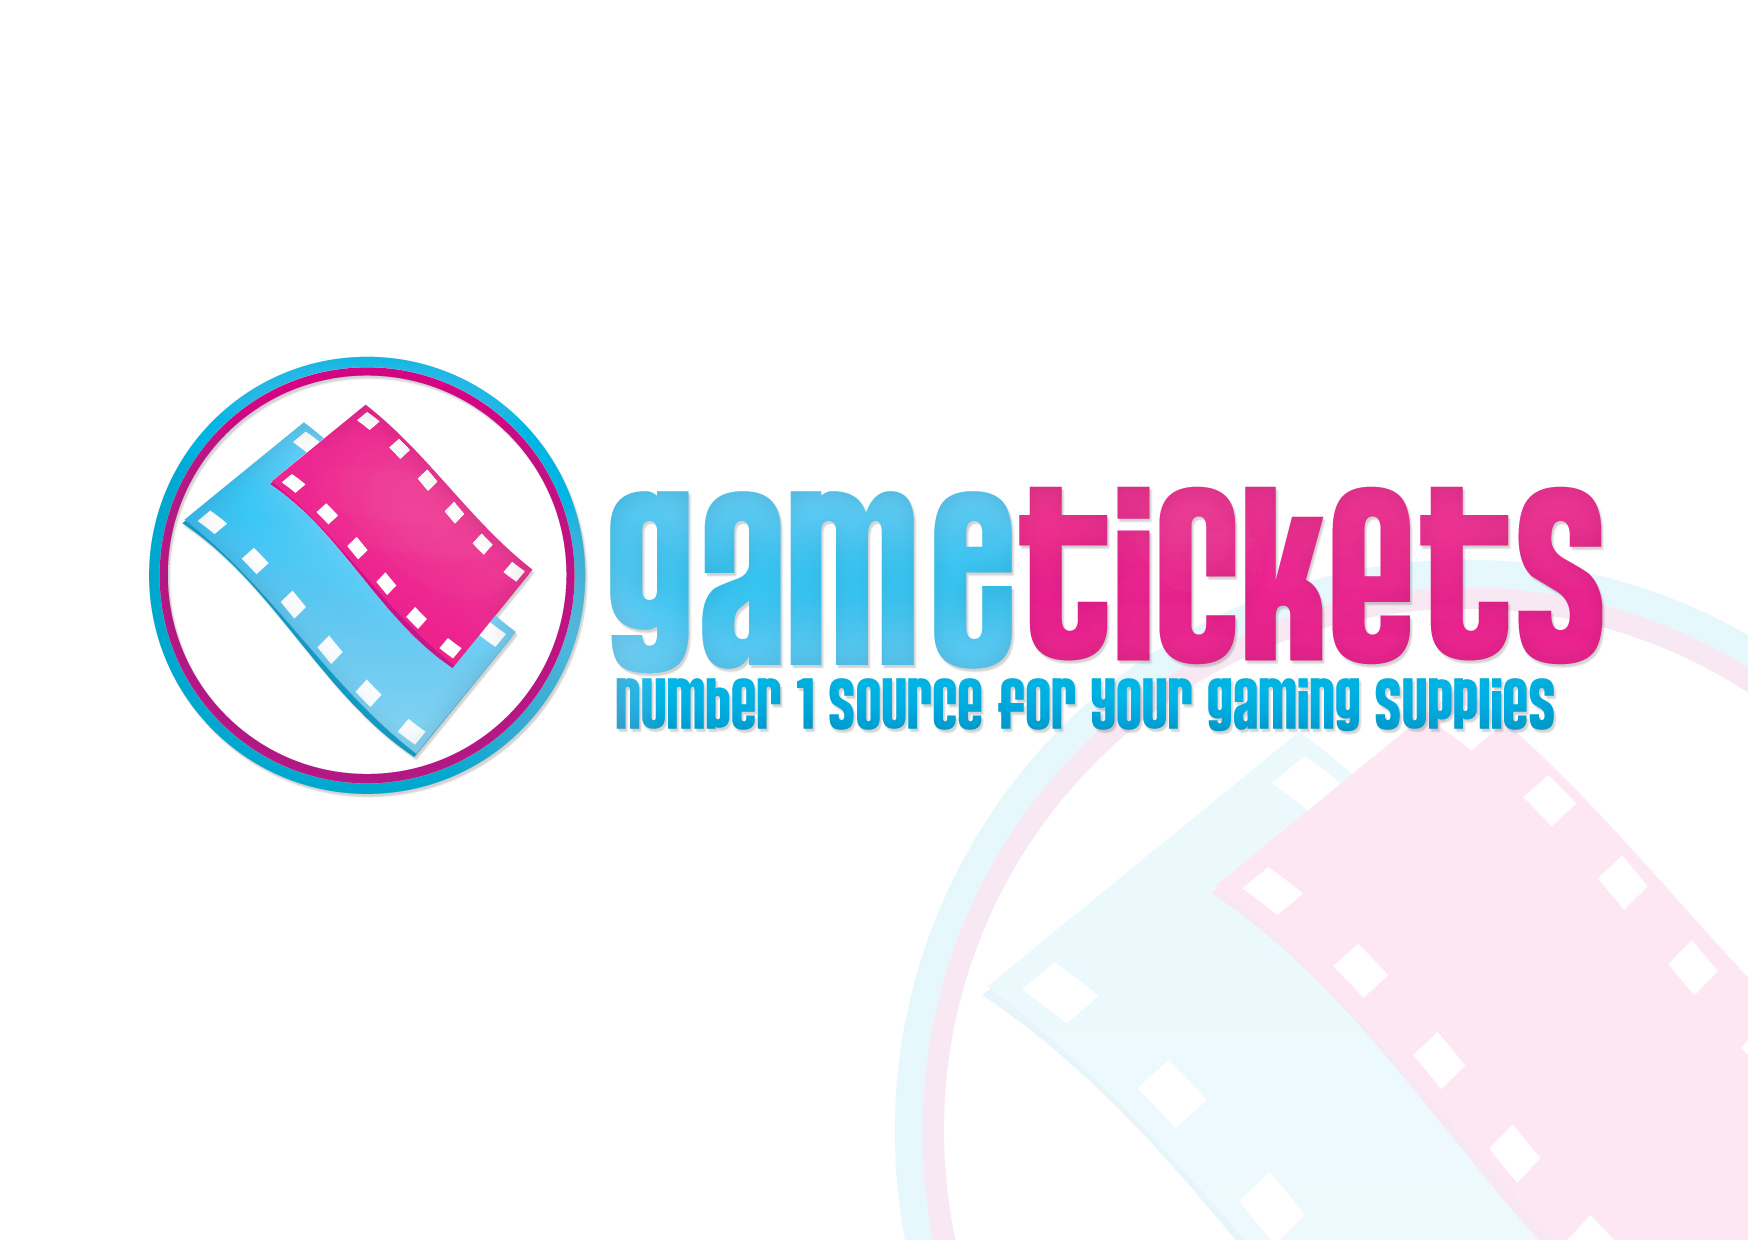 [CHECK] Logo-gameticketslogo-copy-jpg